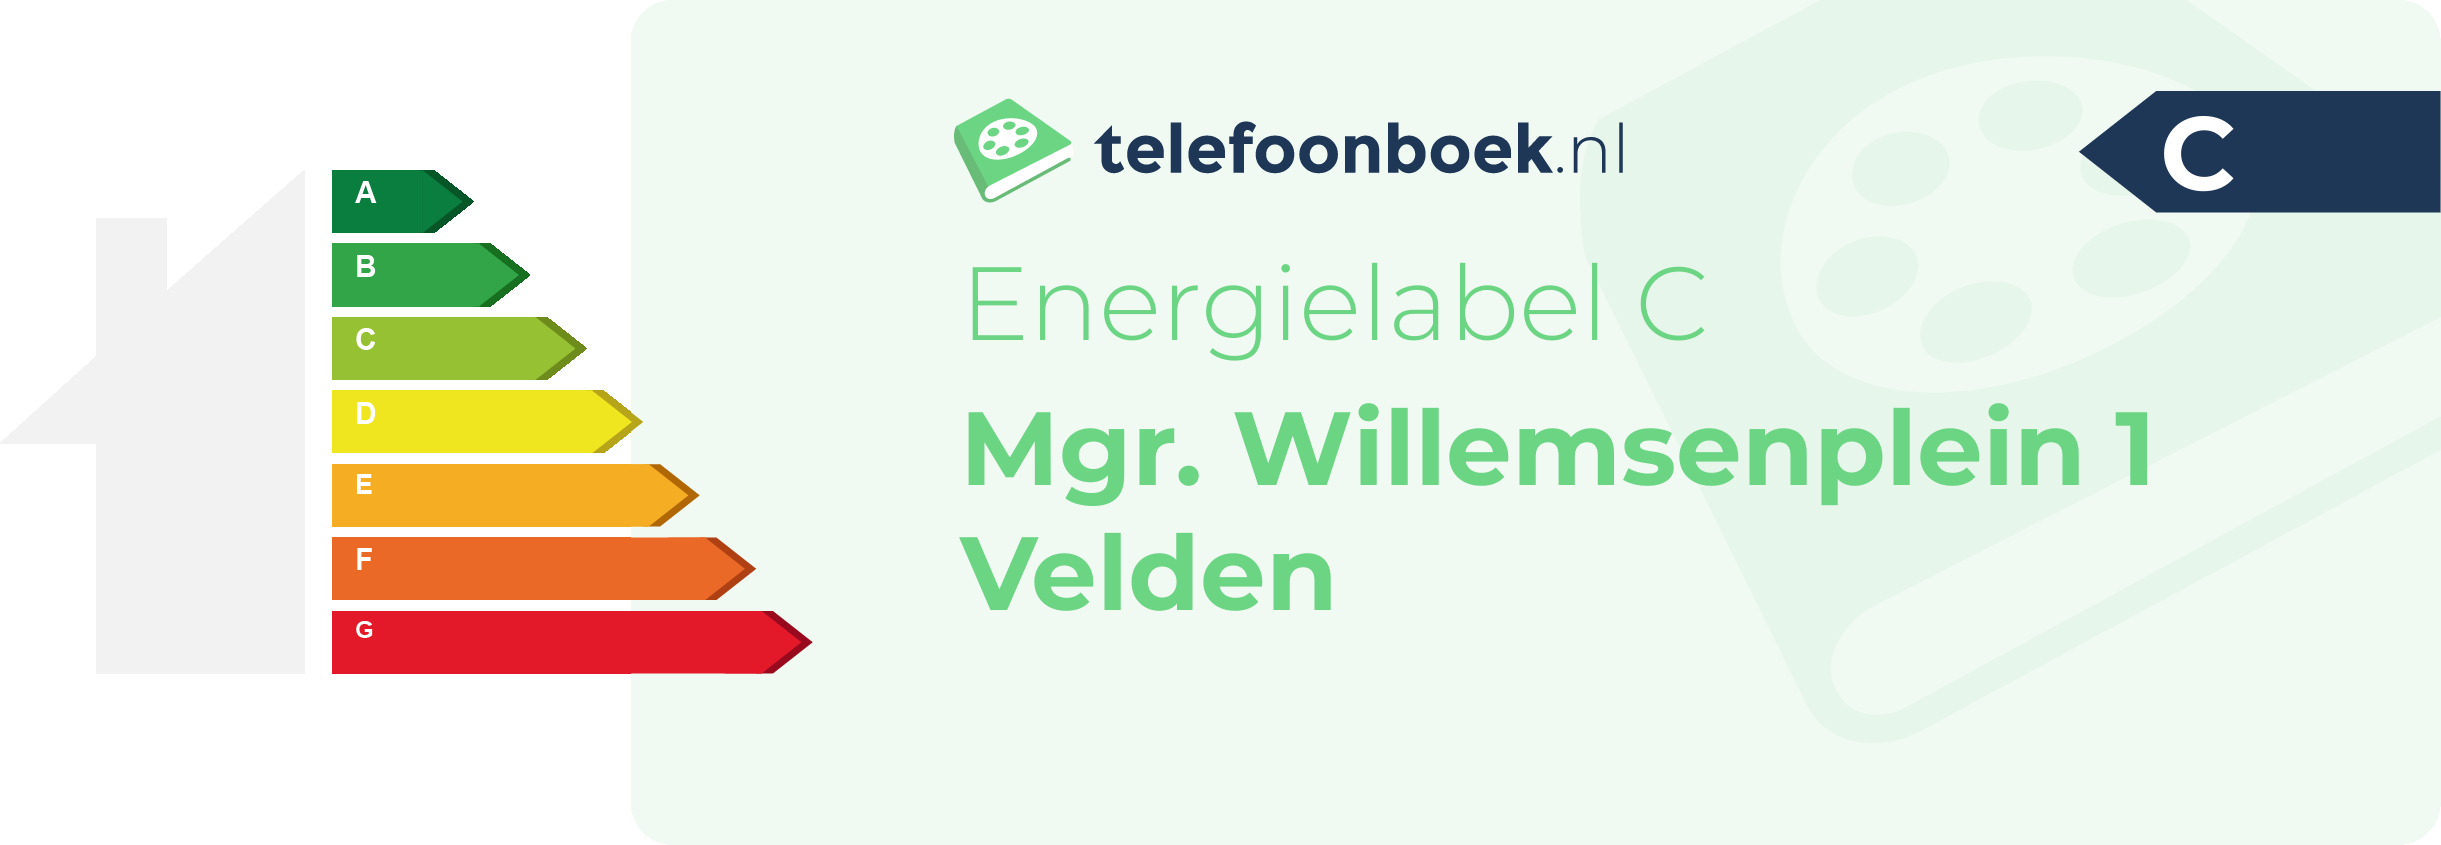 Energielabel Mgr. Willemsenplein 1 Velden